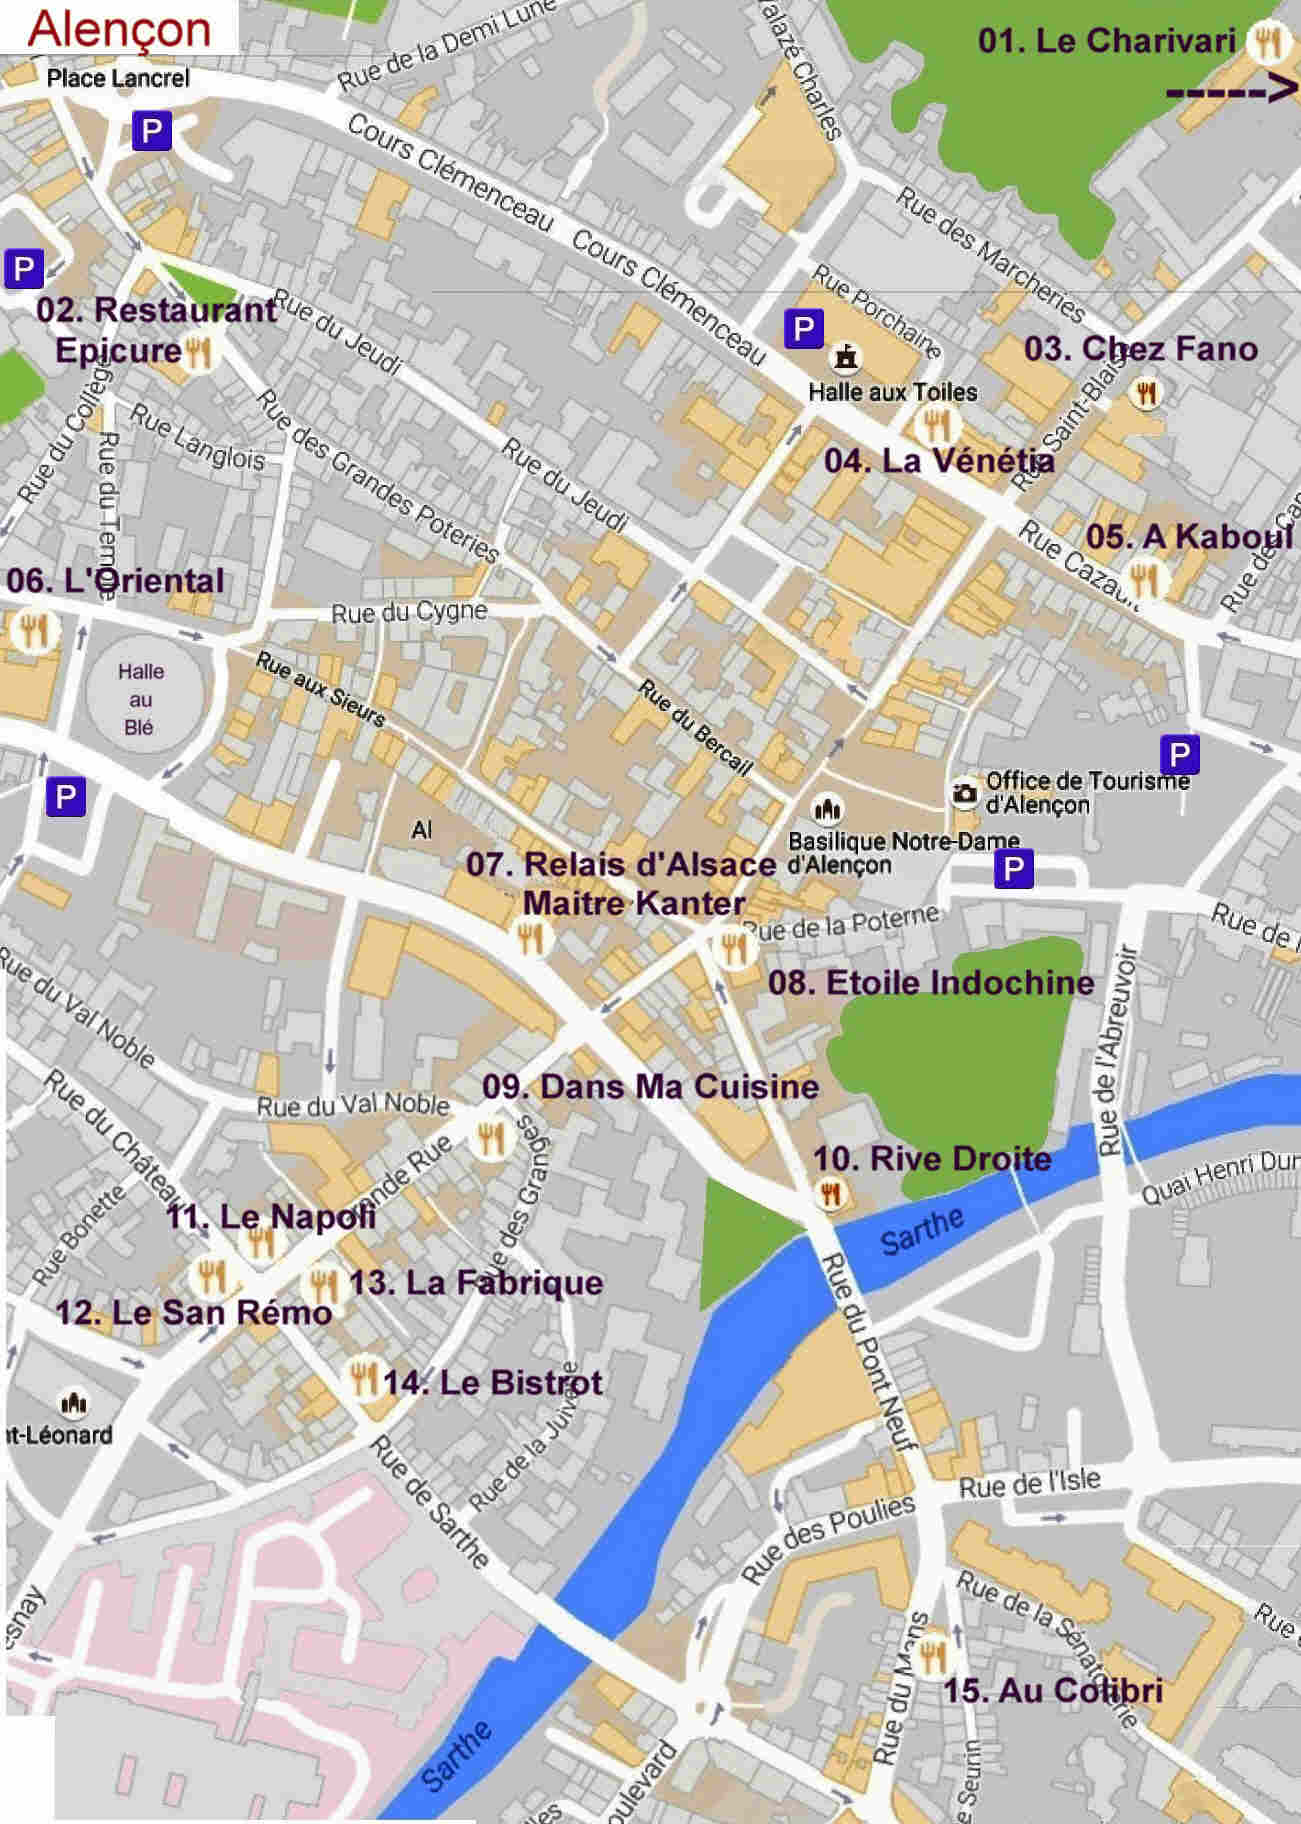 Alencon Map of Restaurants